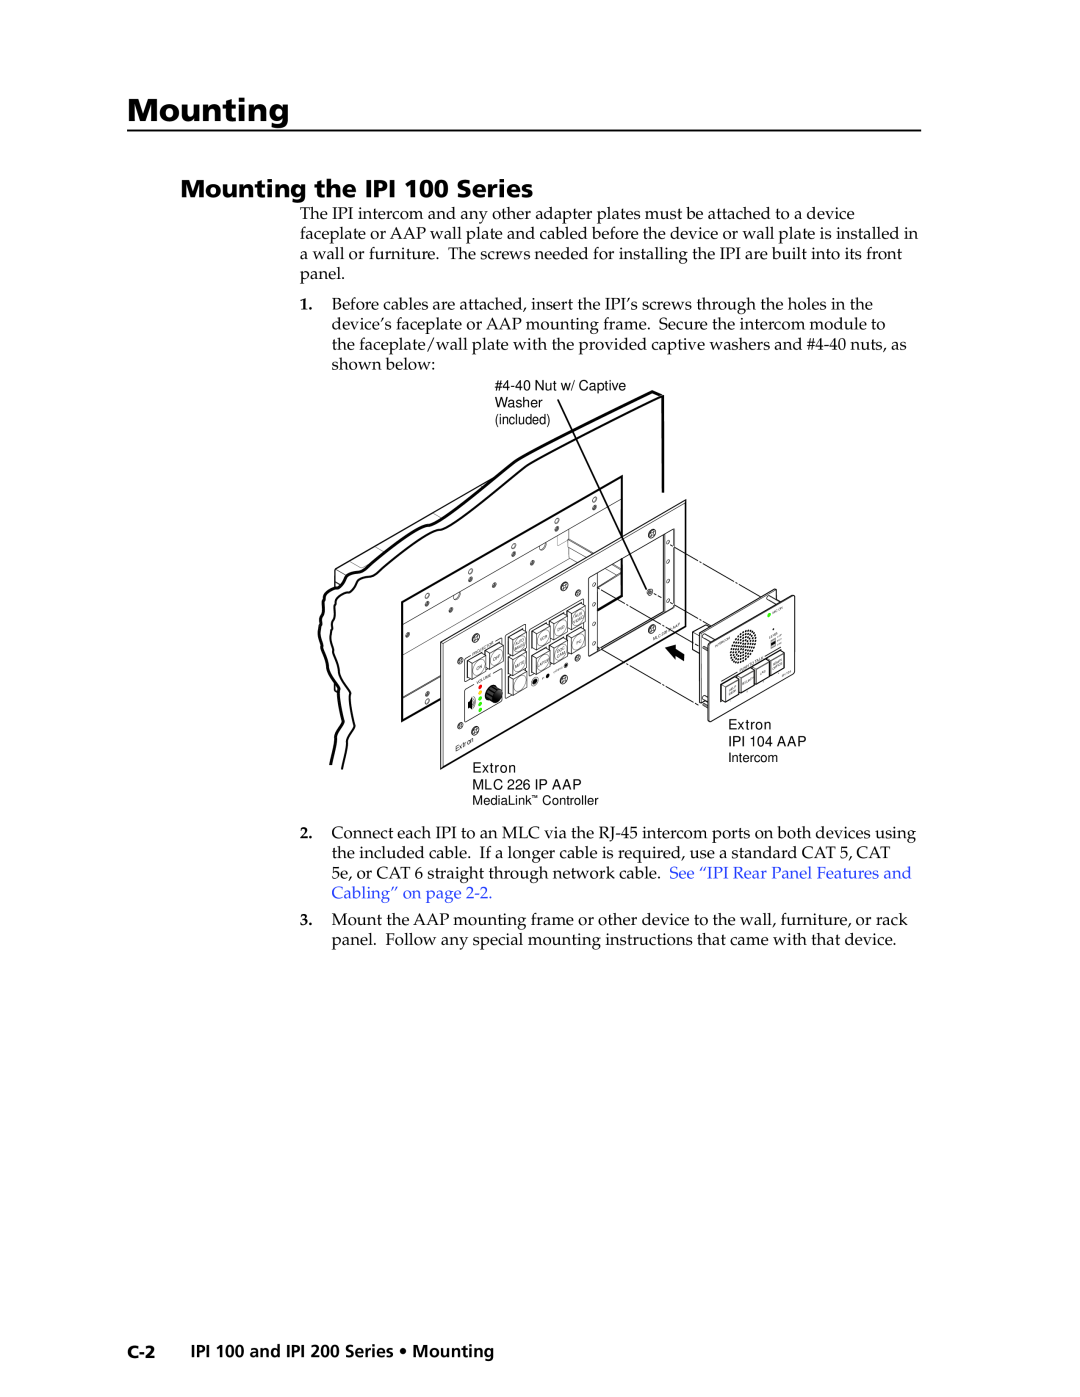 Extron electronic manual Mounting the IPI 100 Series, C-2 IPI 100 and IPI 200 Series Mounting 